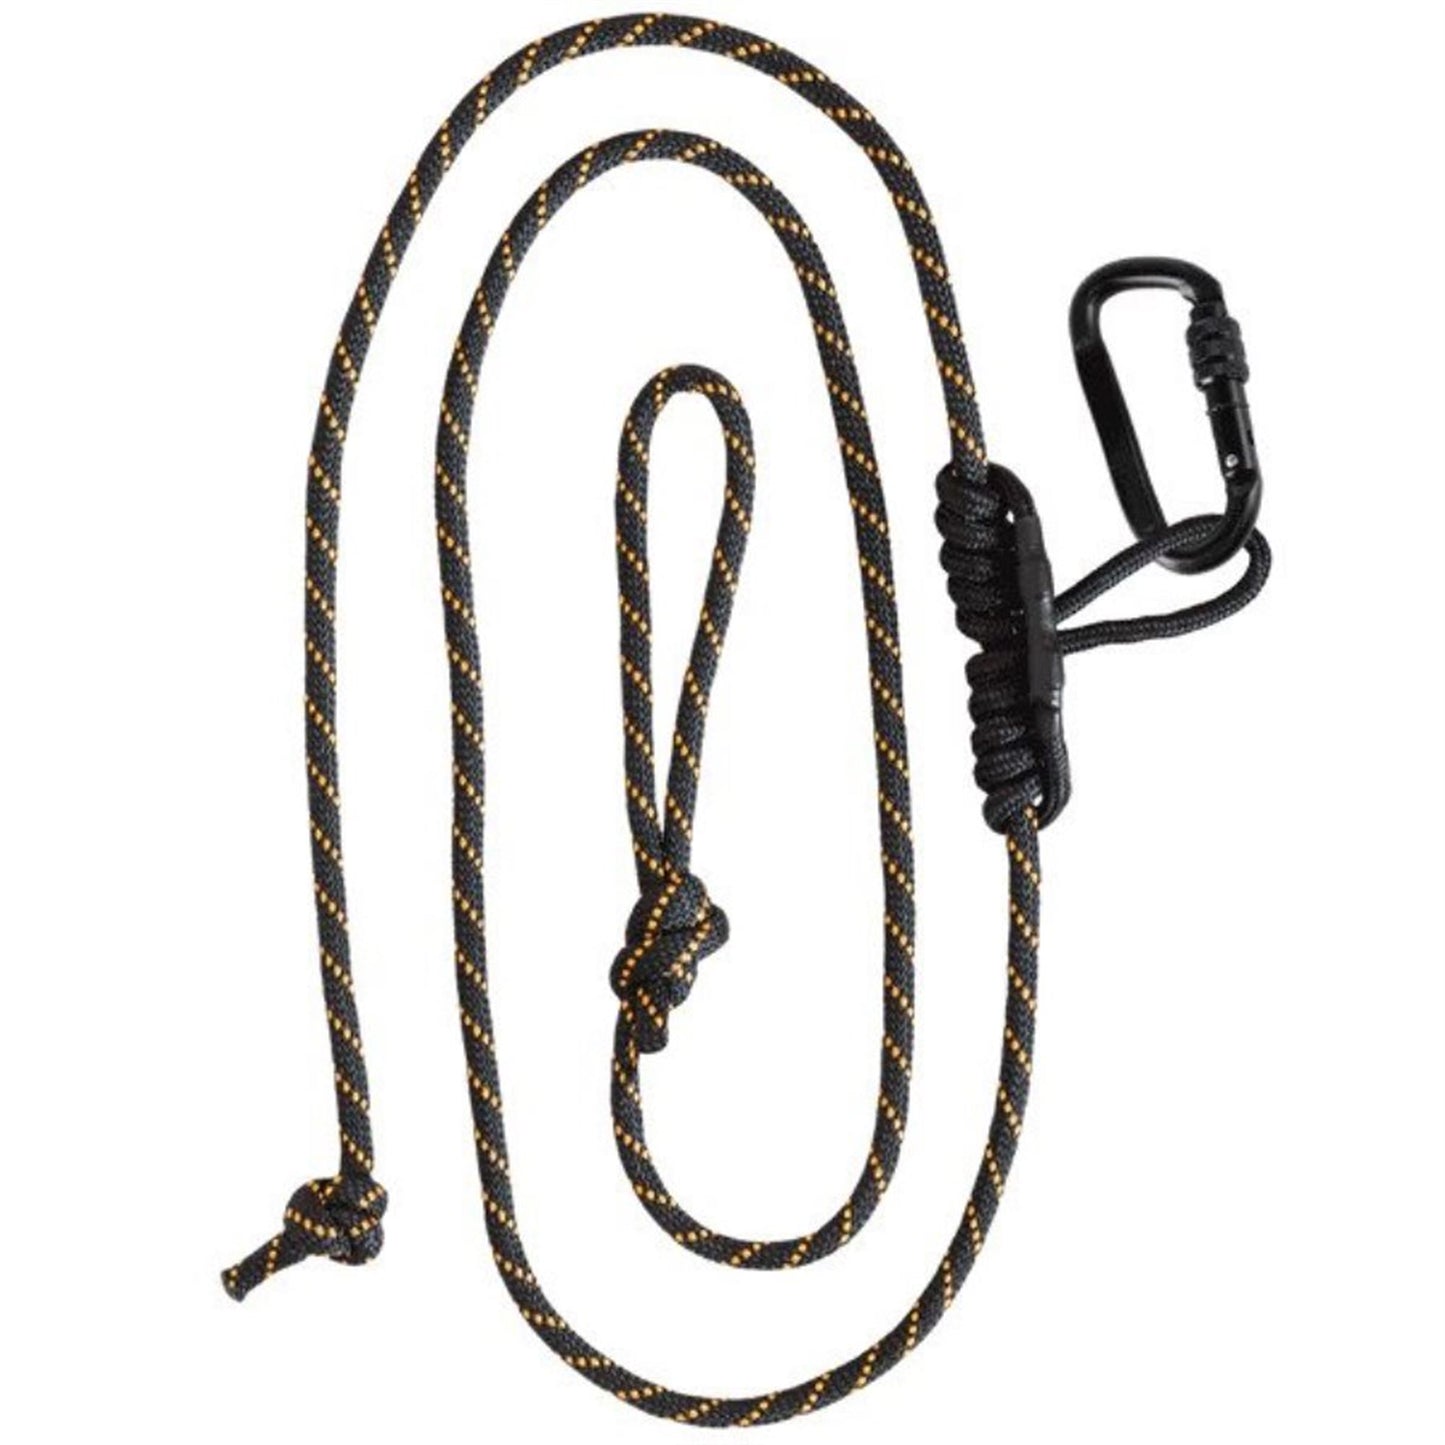 Muddy MUDMSA070 The Safety Harness Braided Nylon Linemans Rope